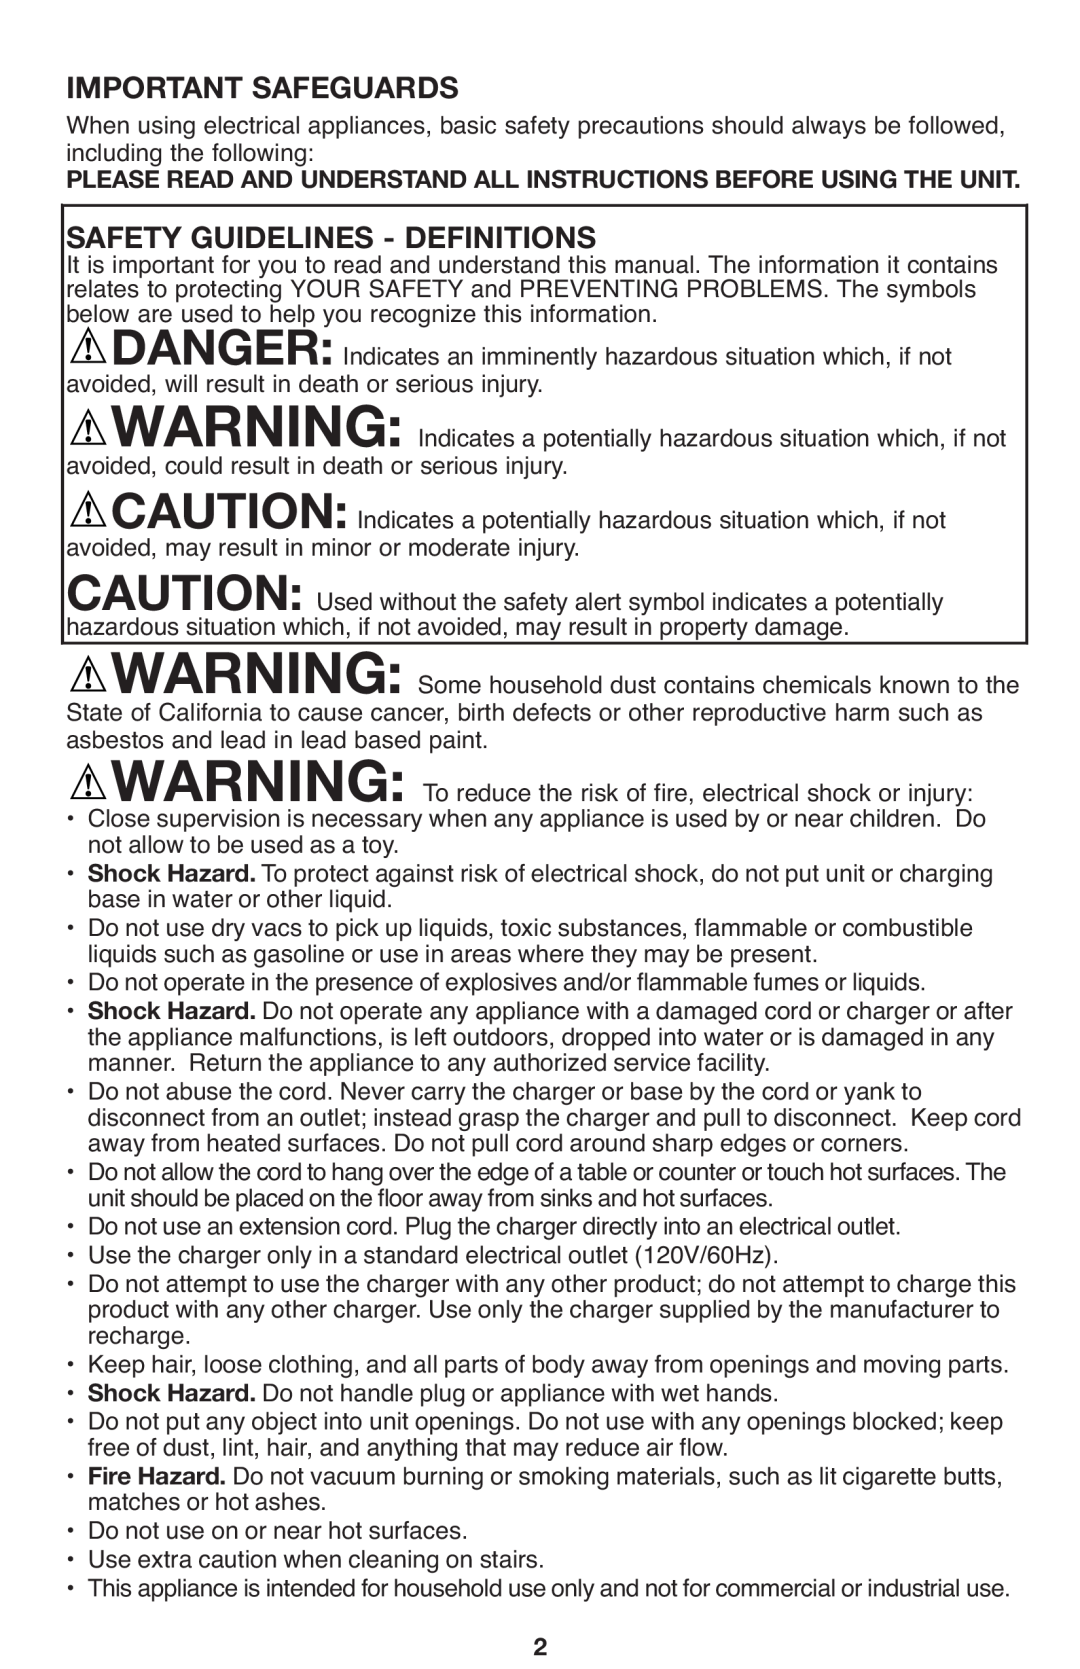 Black & Decker 90564858, FHV1200, FHV1080 manual Important Safeguards, Safety Guidelines - Definitions 